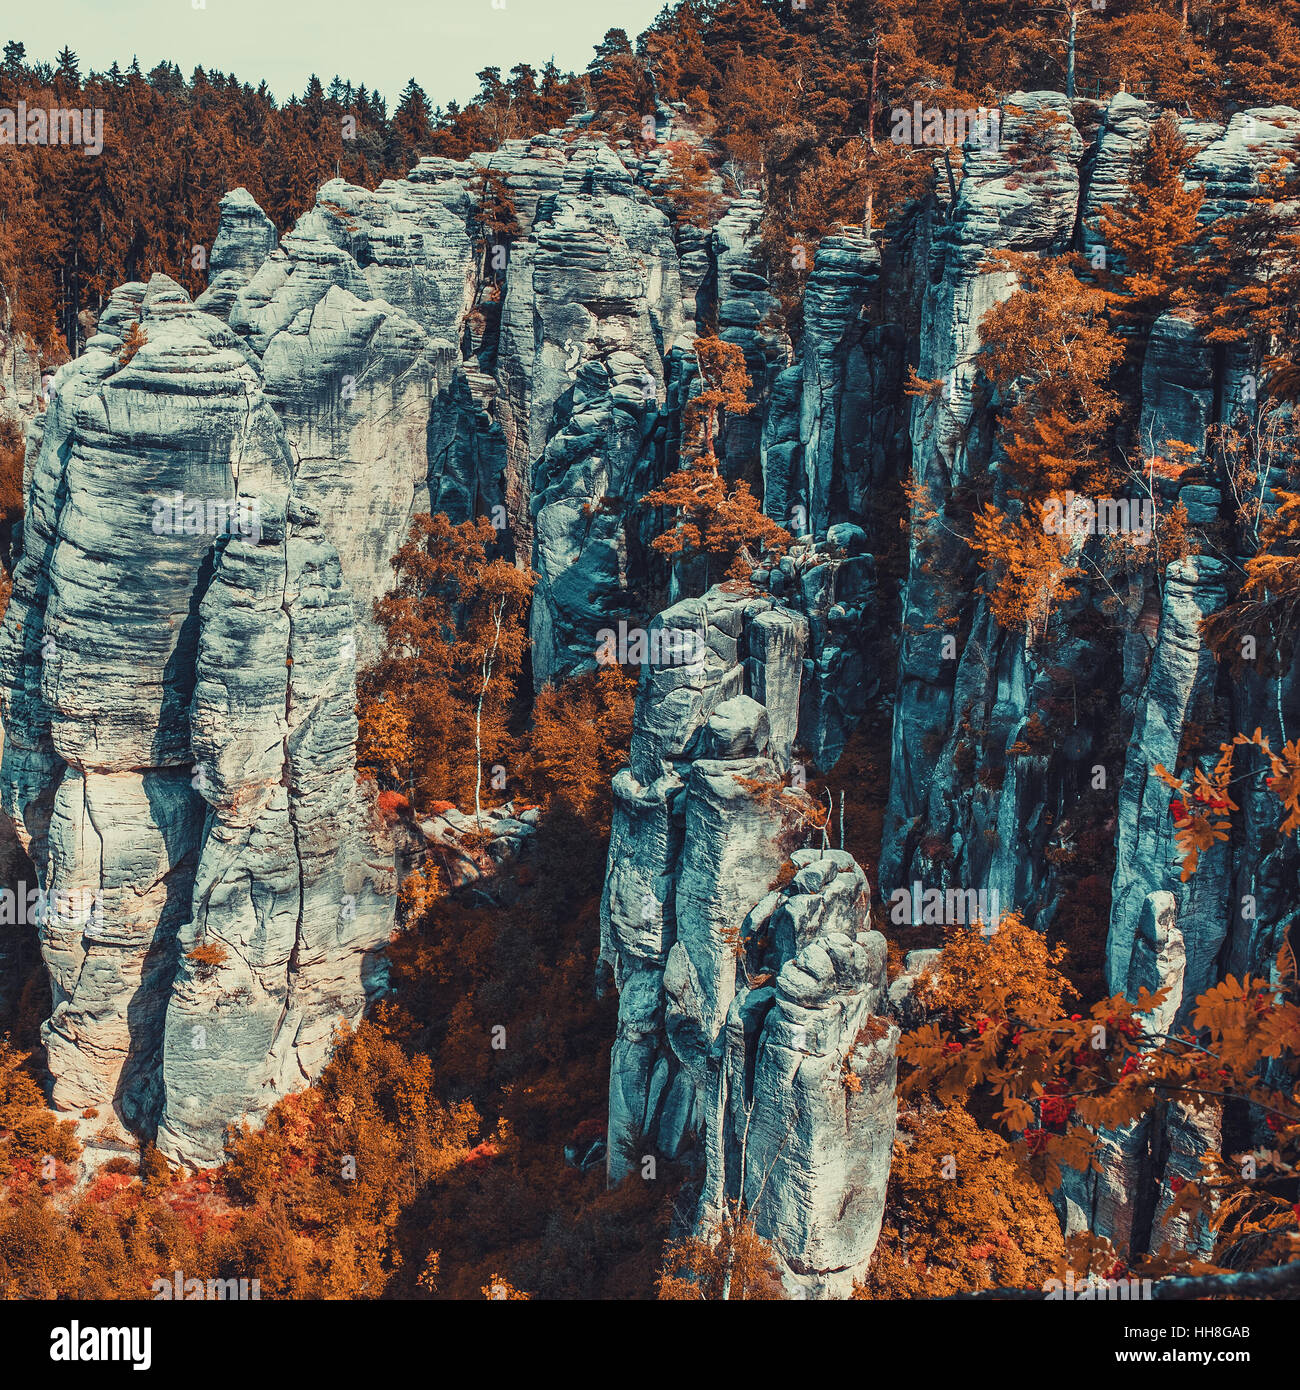 Adersbach-Teplice Felsen in Tschechien am Herbstsaison Stockfoto